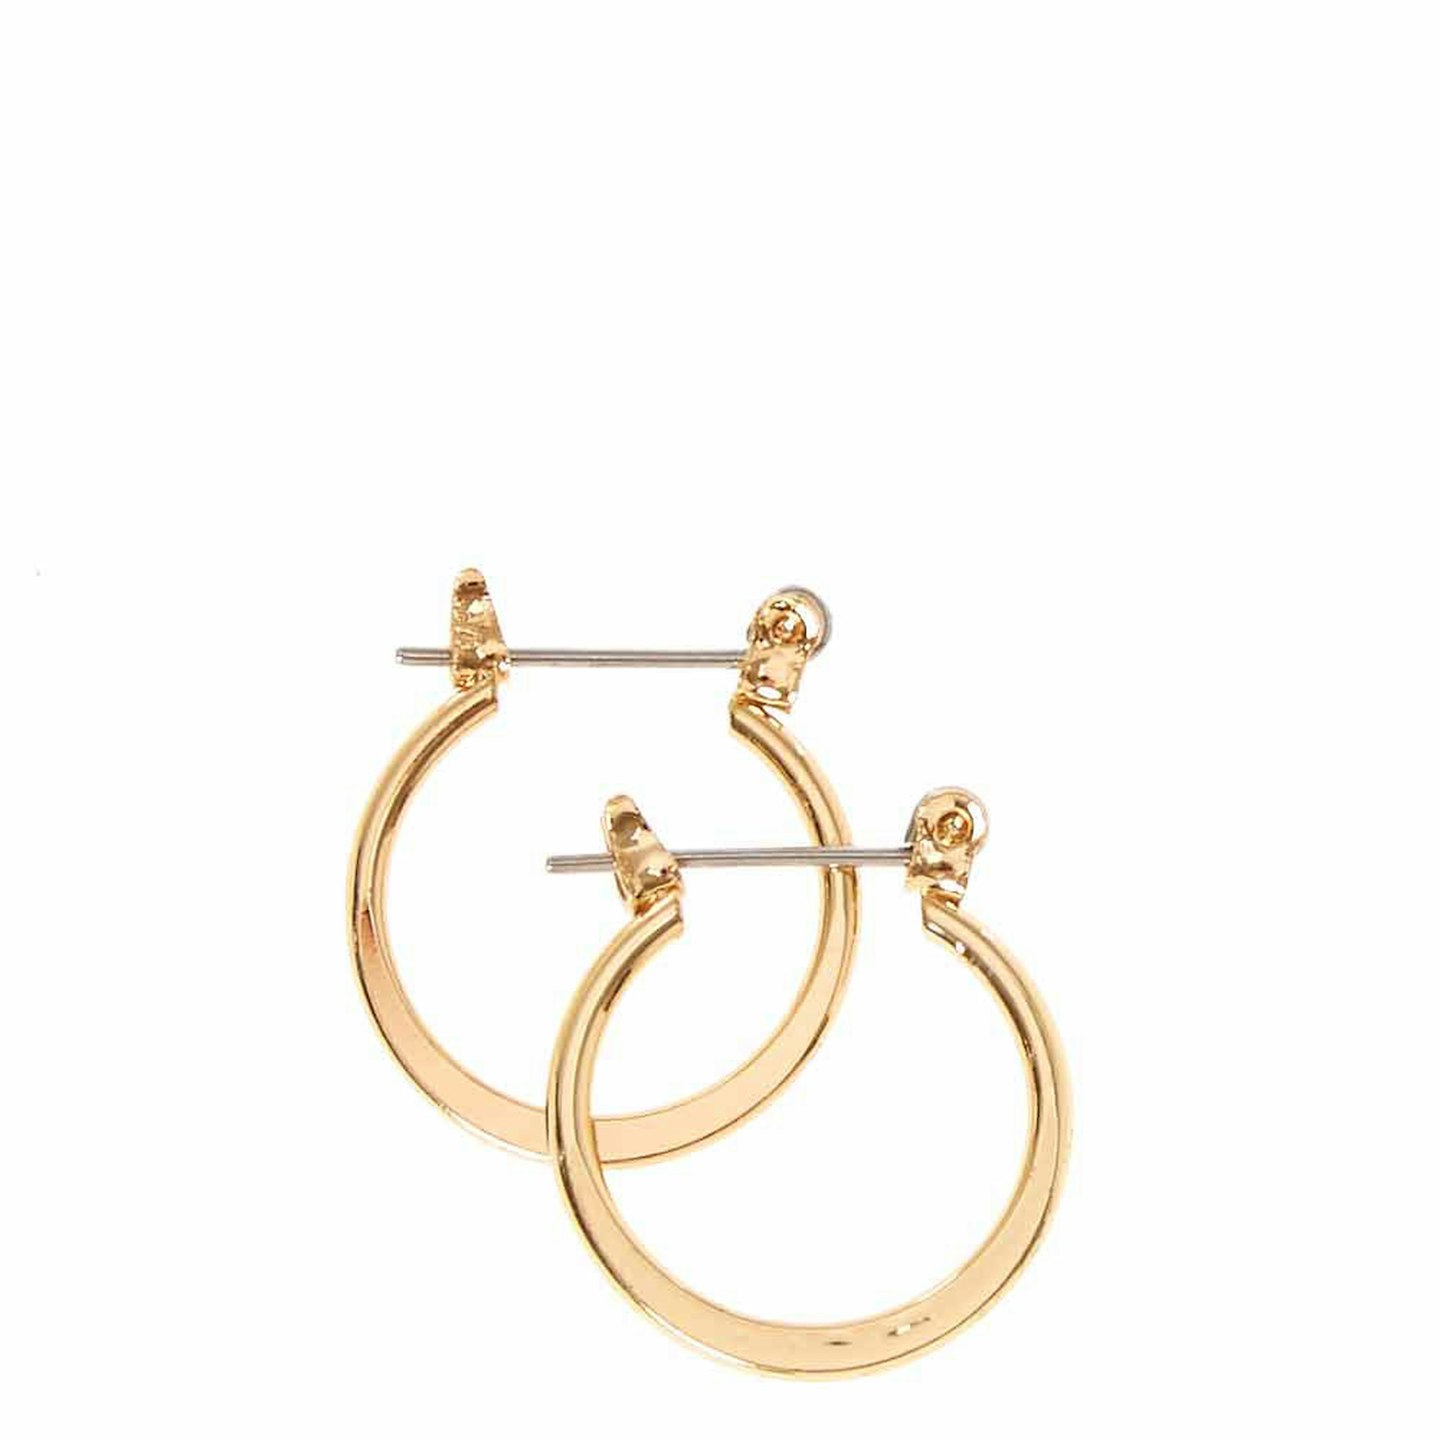 gold-earrings-khloe-kardashian